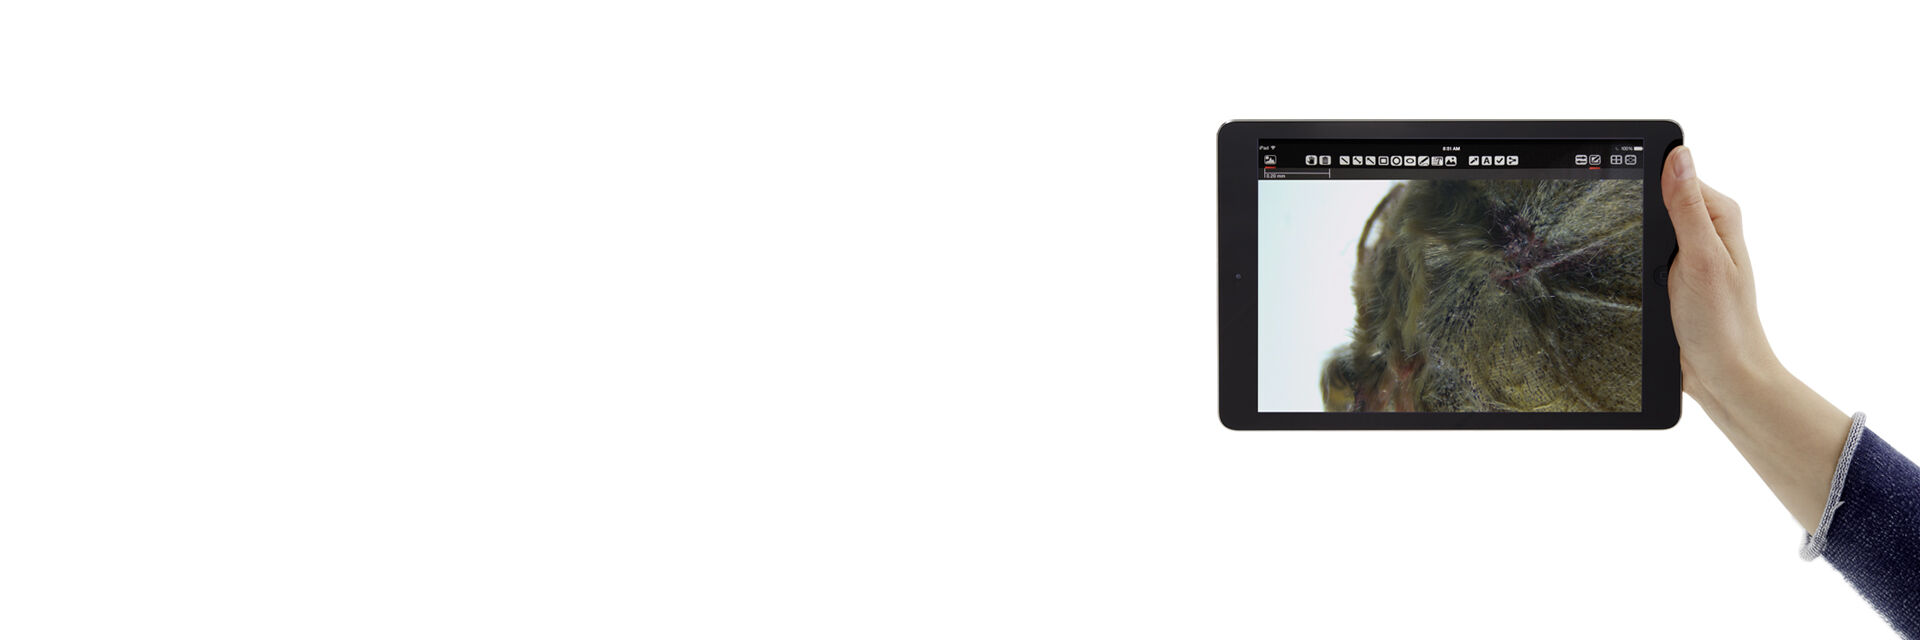 Leica EZ4 Wi-Fi Moth Image in Tablet